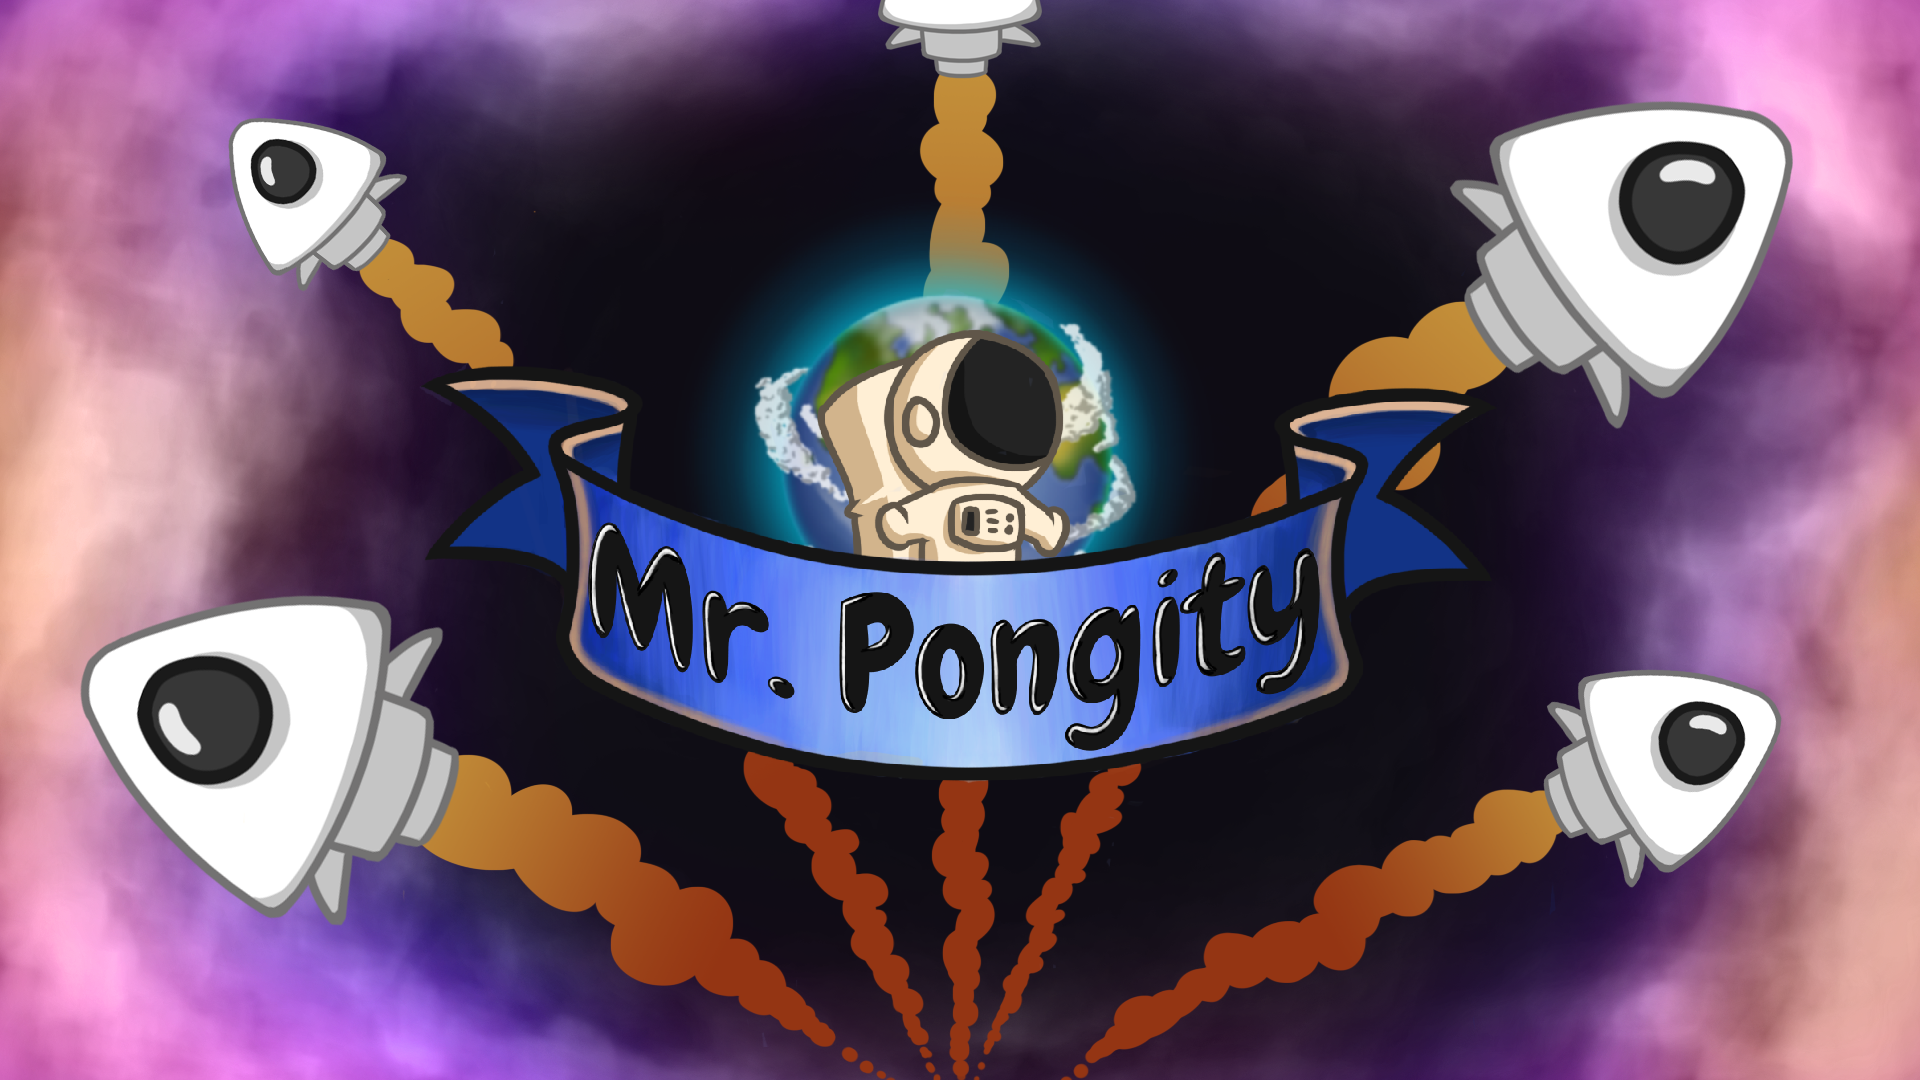 Mr. Pongity